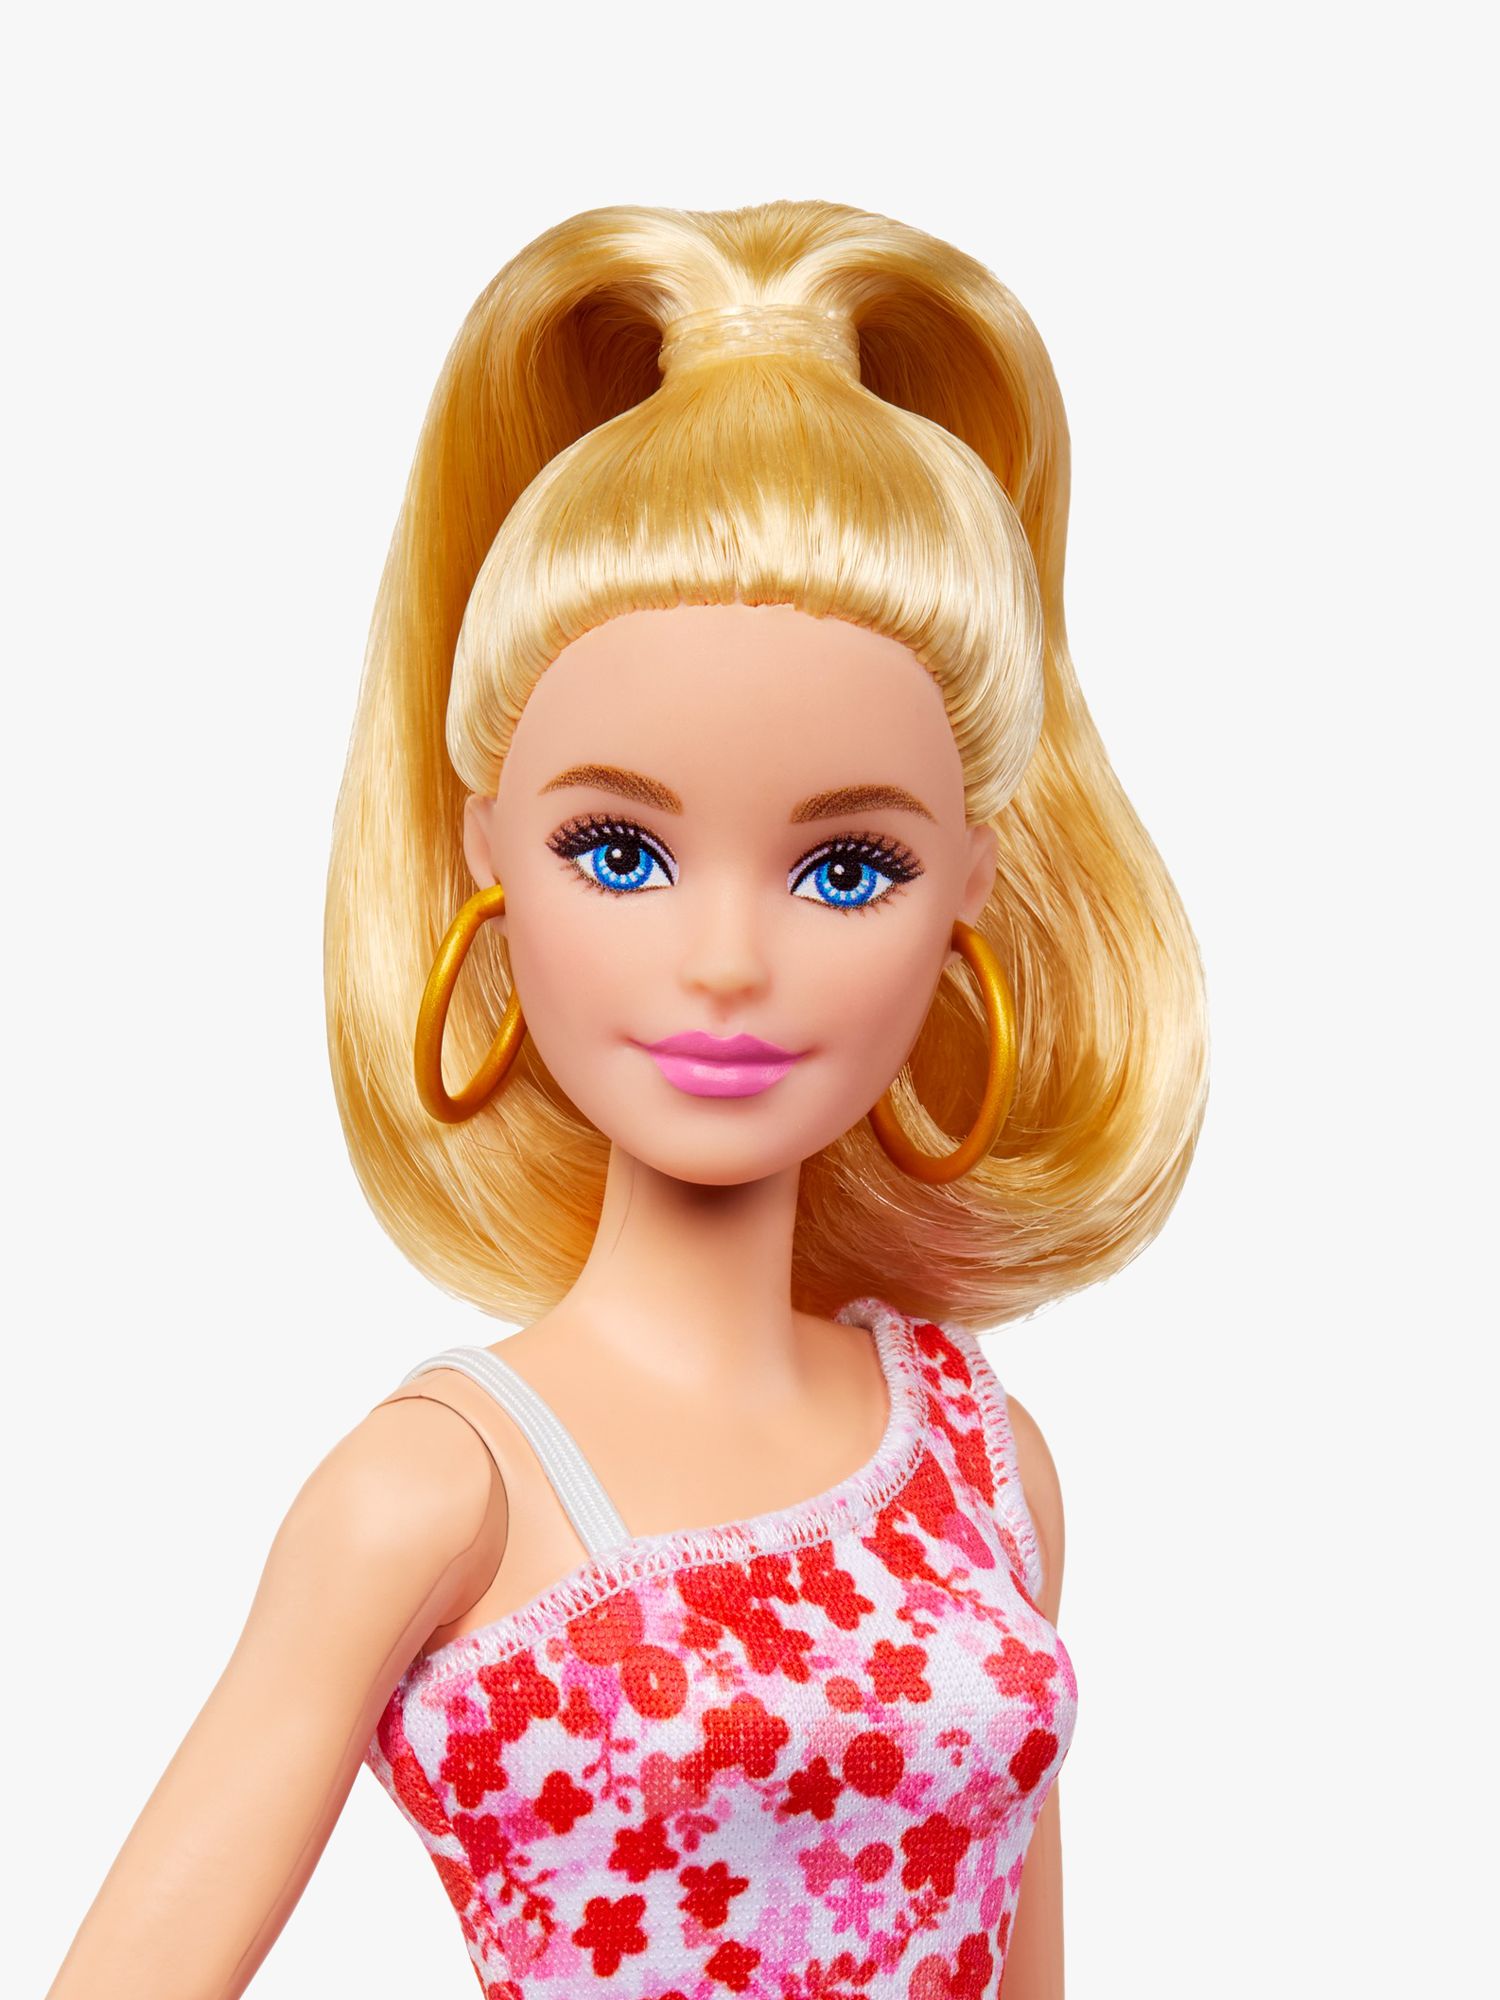 Barbie Distorted Dots Dress Doll